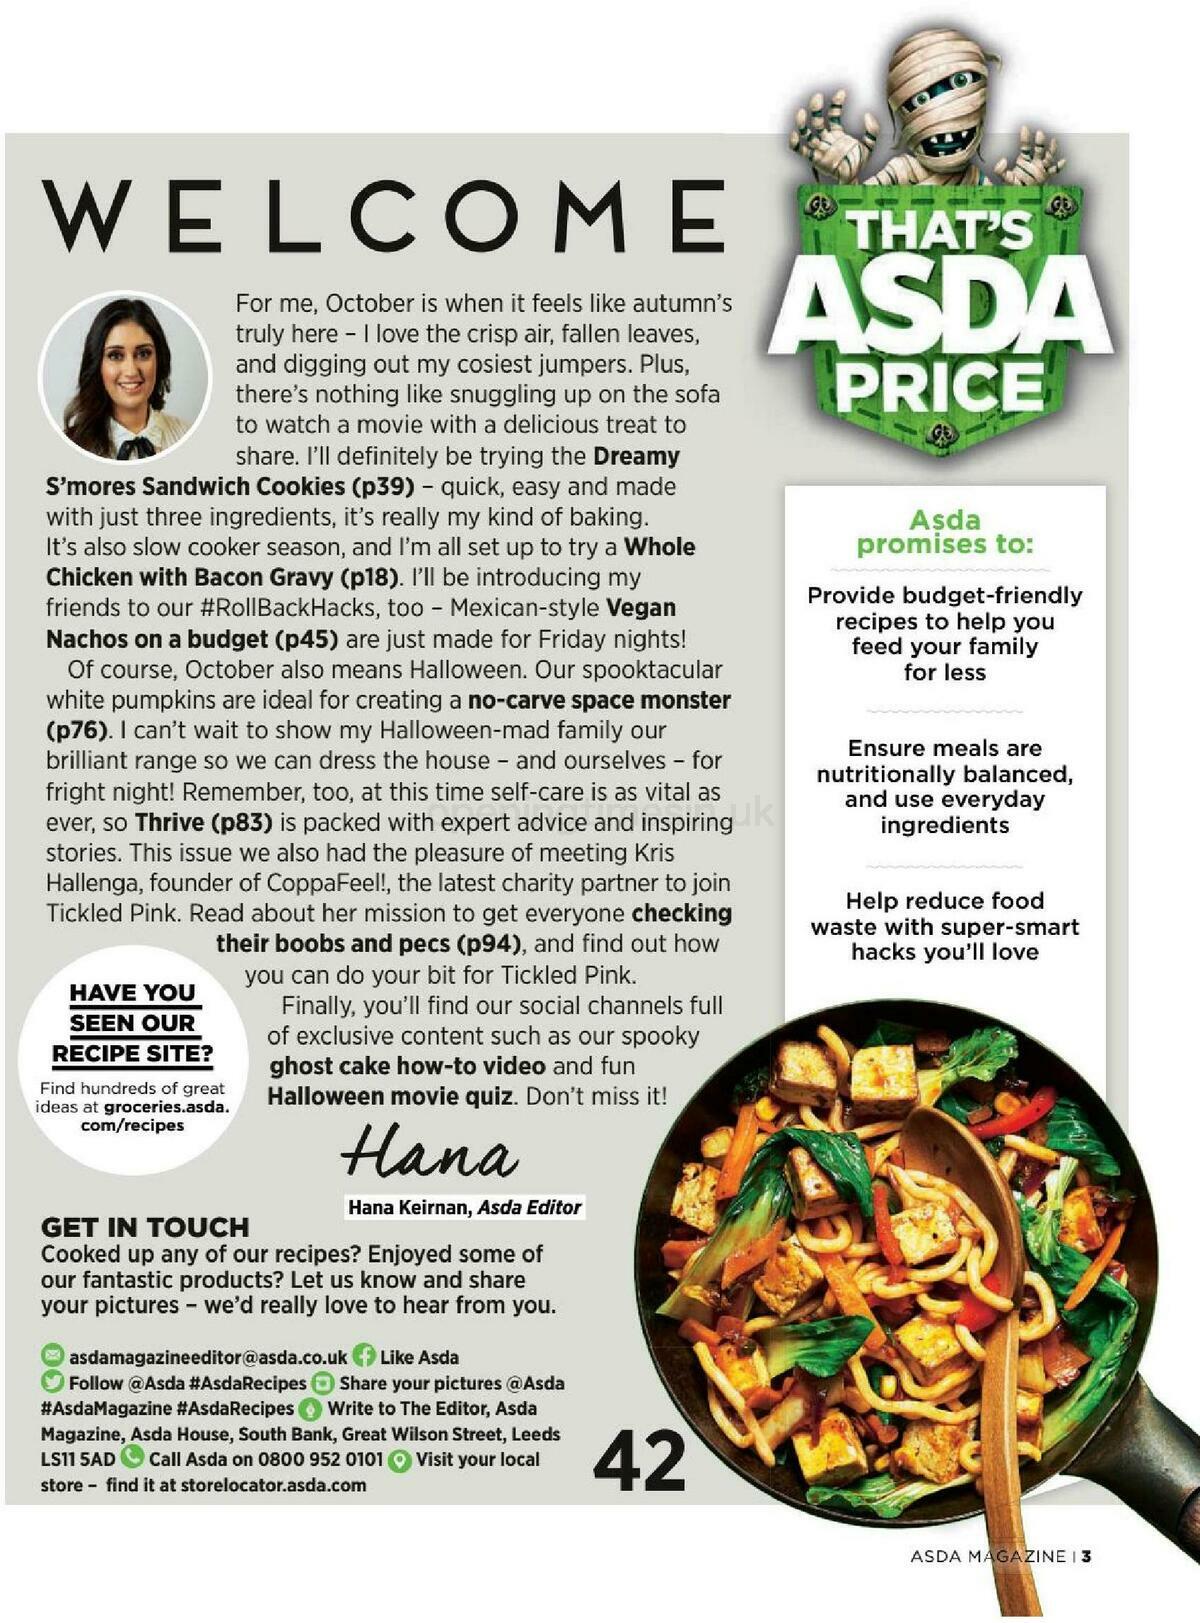 ASDA Magazine October 2020 Offers from 1 October